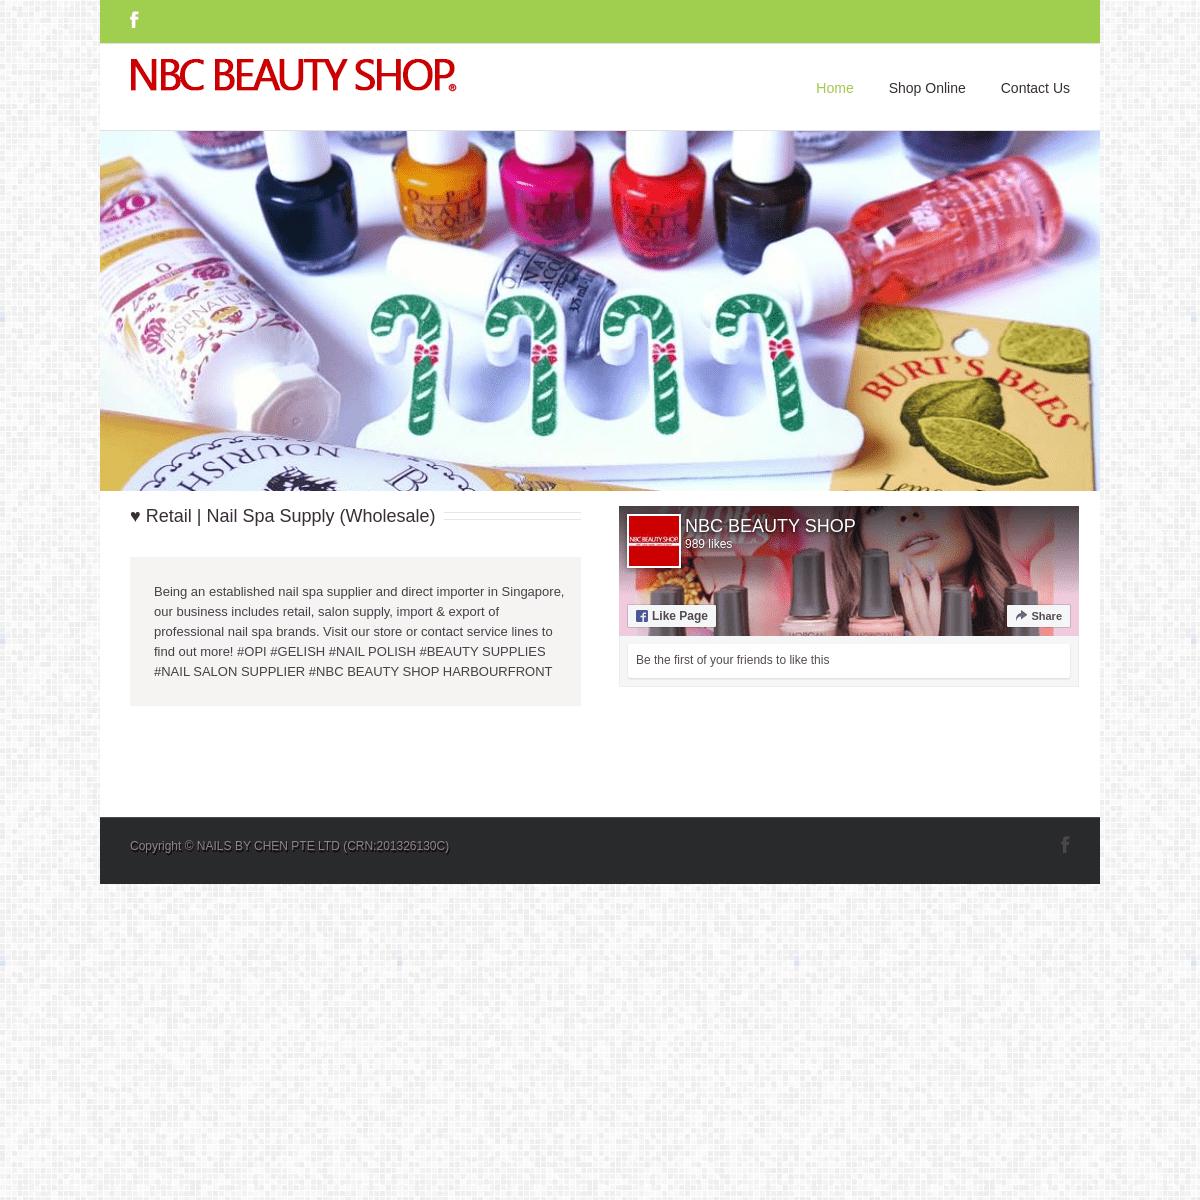 A complete backup of nbcbeautyshop.com.sg